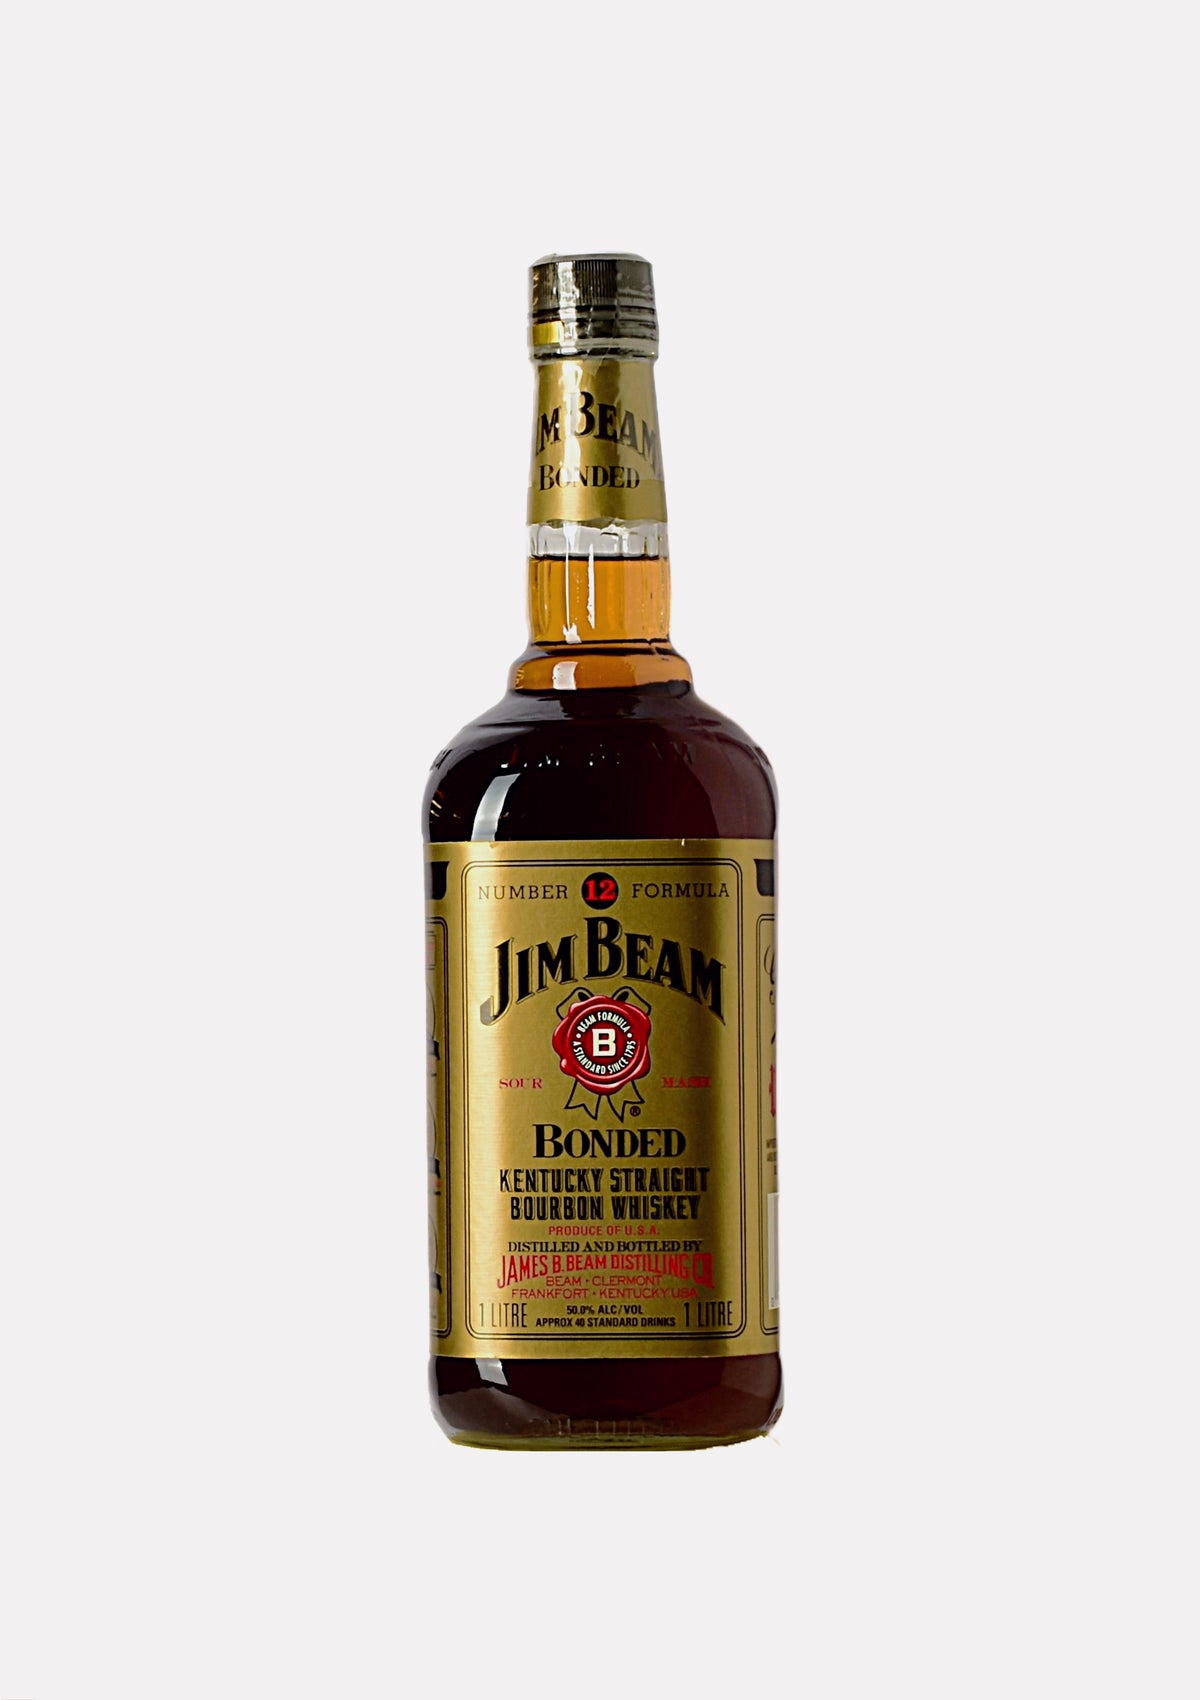 Jim Beam Bonded Kentucky Straight Bourbon Whiskey